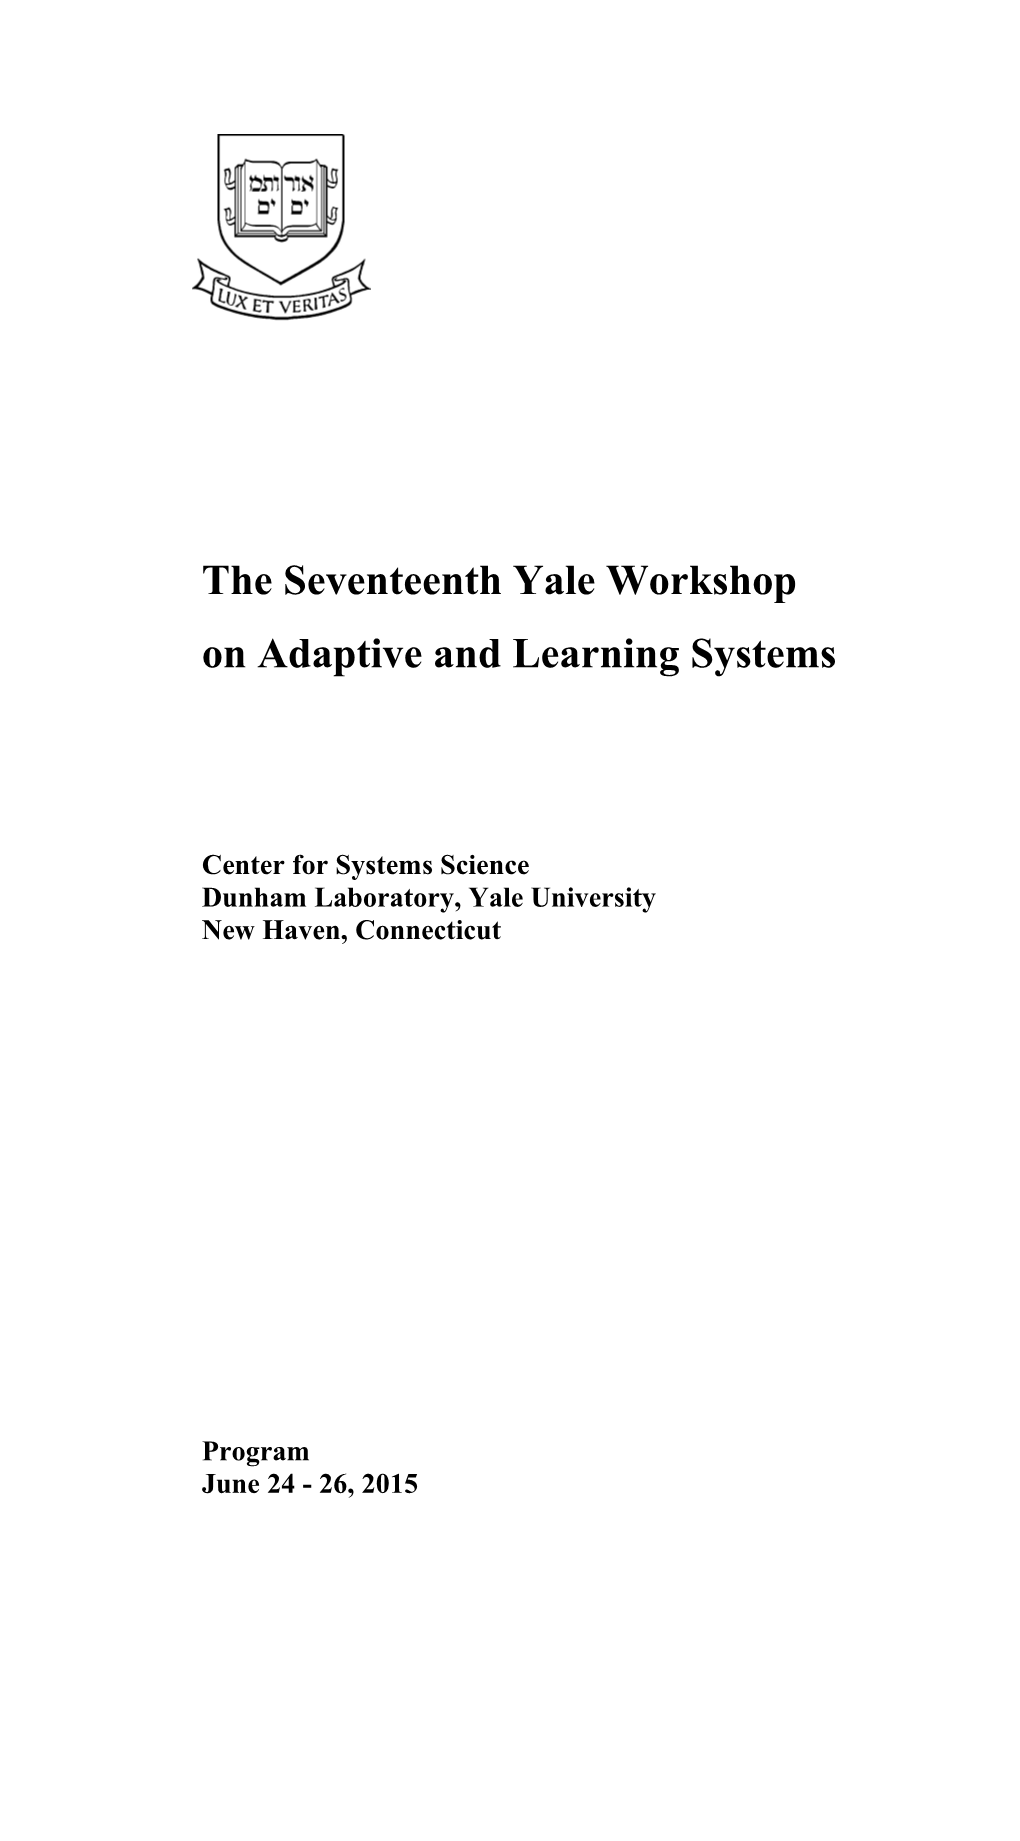 The Seventeenth Yale Workshop